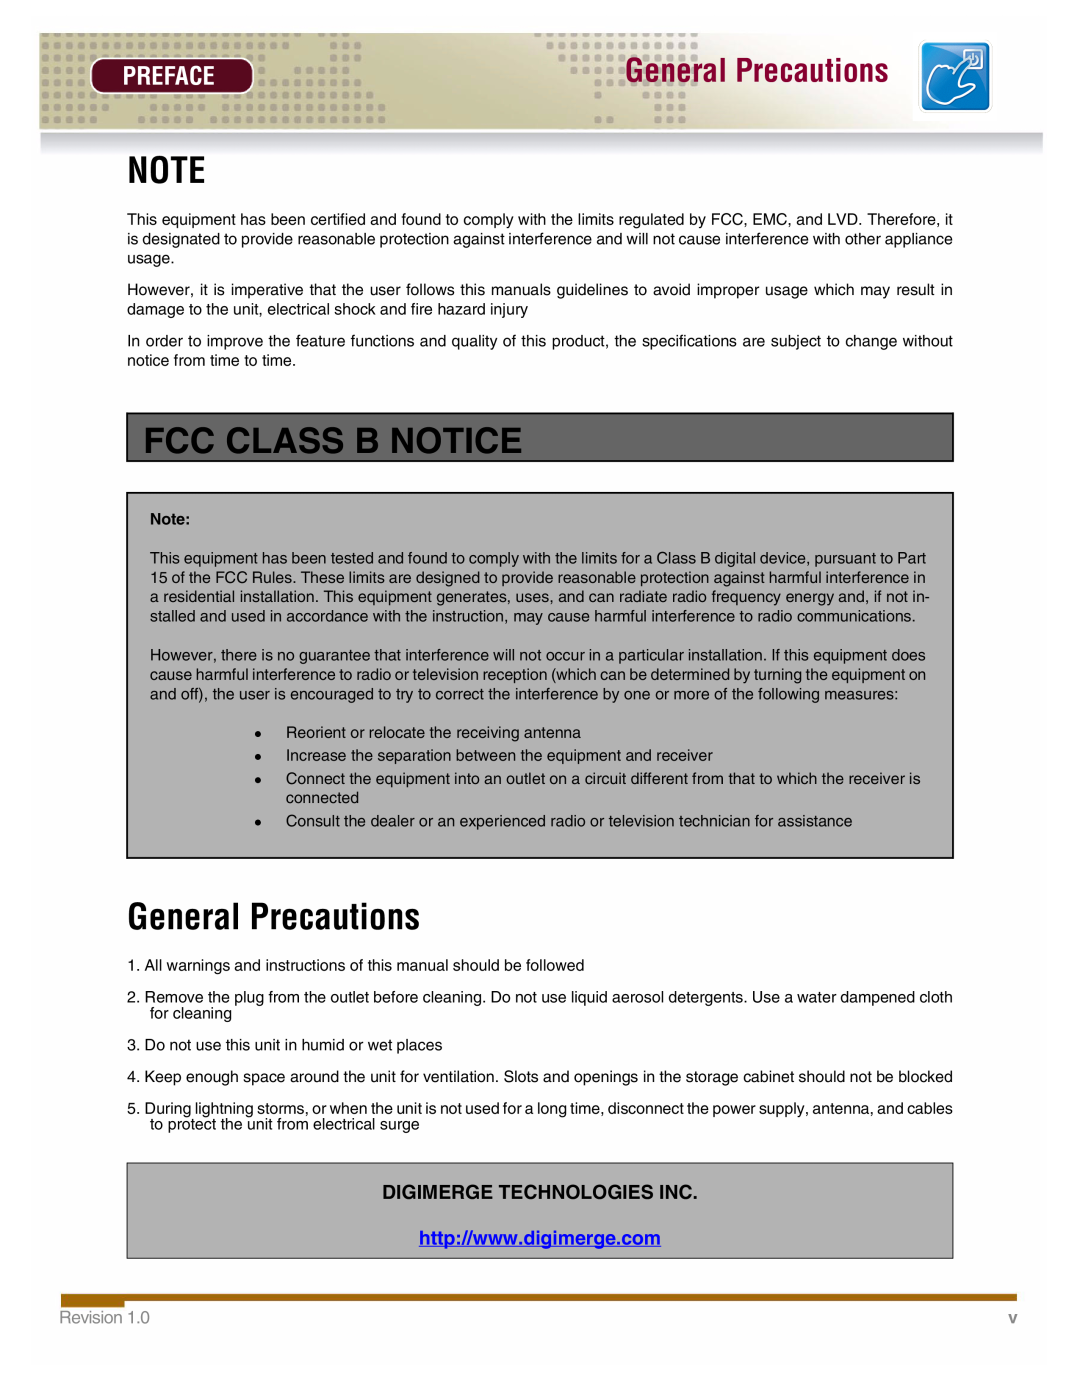 LOREX Technology DHU500 manual Fcc Class B Notice, General Precautions, Preface, Digimerge Technologies Inc, Revision 